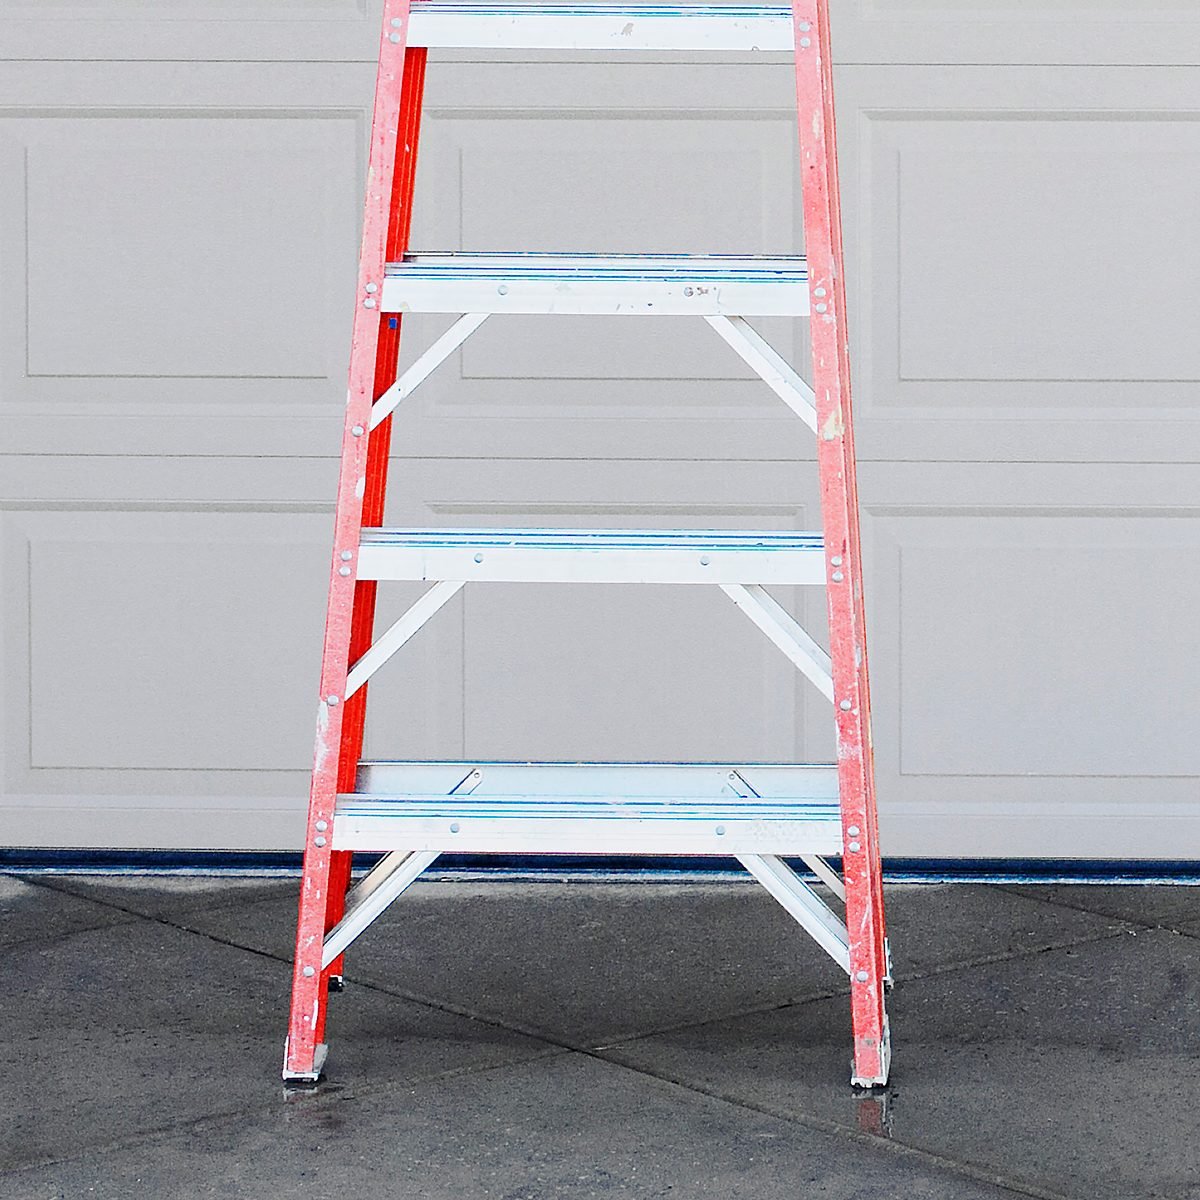 How Do You Make a Ladder Sturdier?